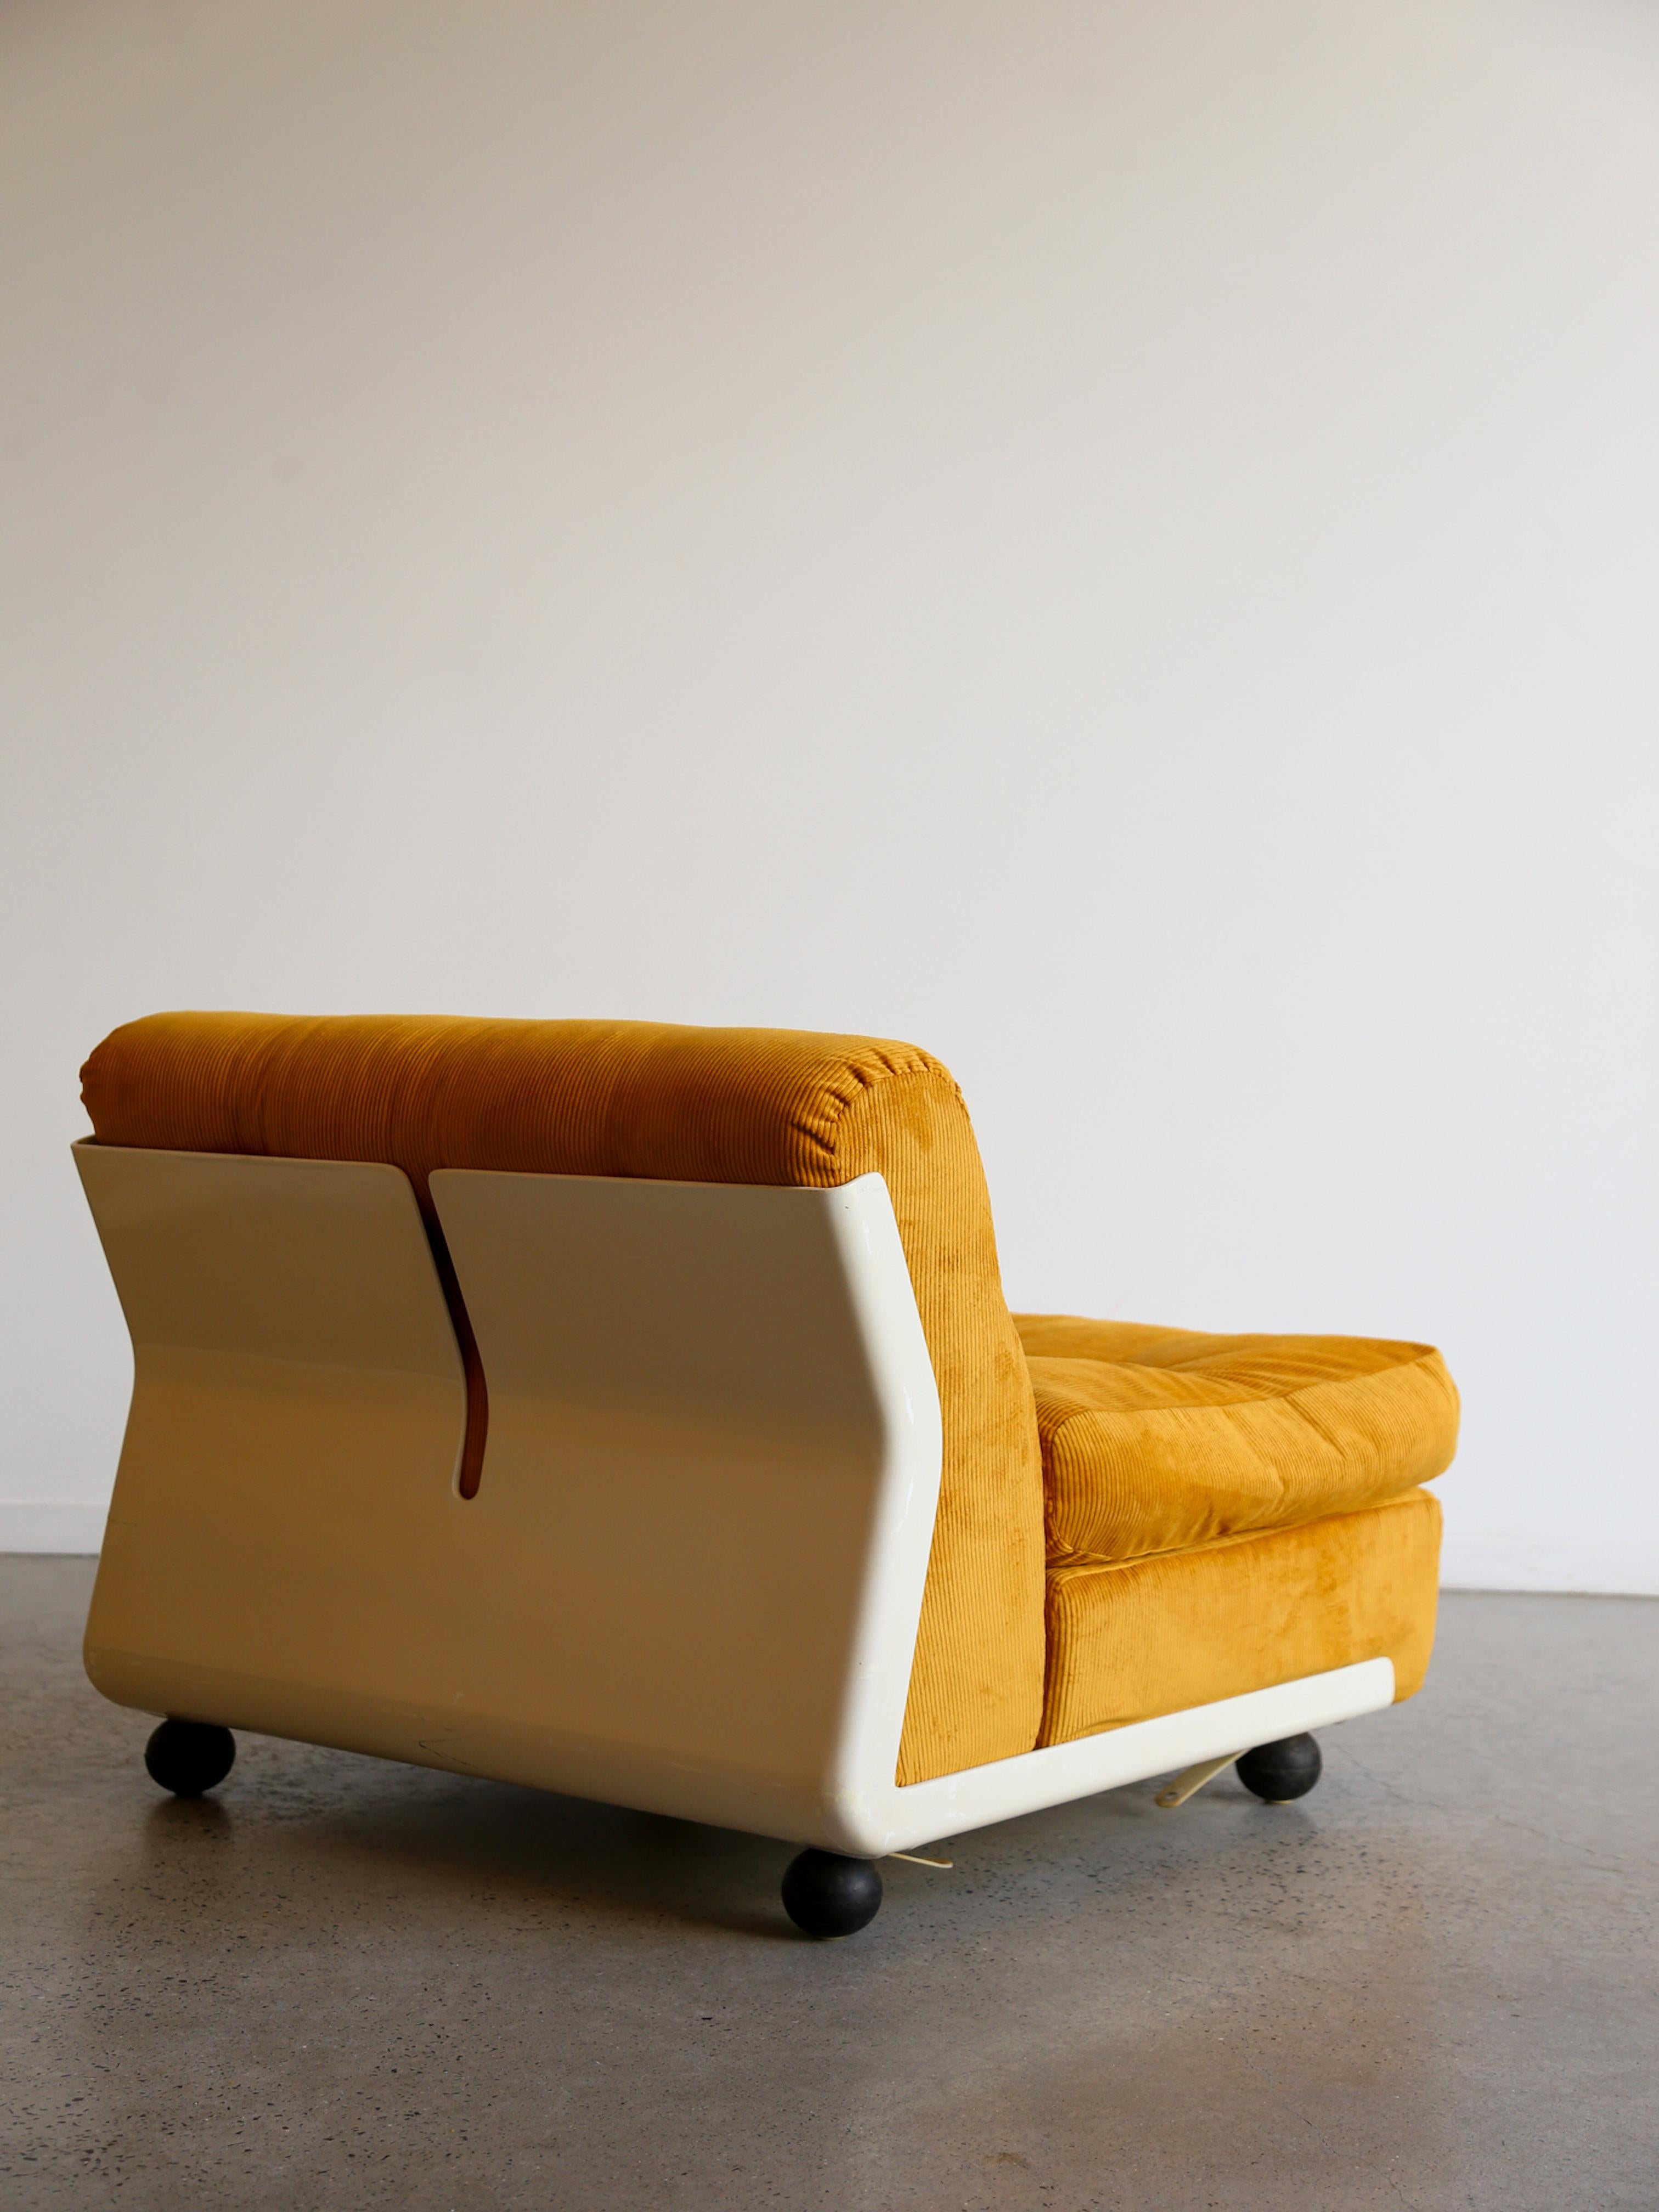 Leather Amanta Modular Sofa in Camel Velvet  By Mario Bellini for B&B Italia 1970